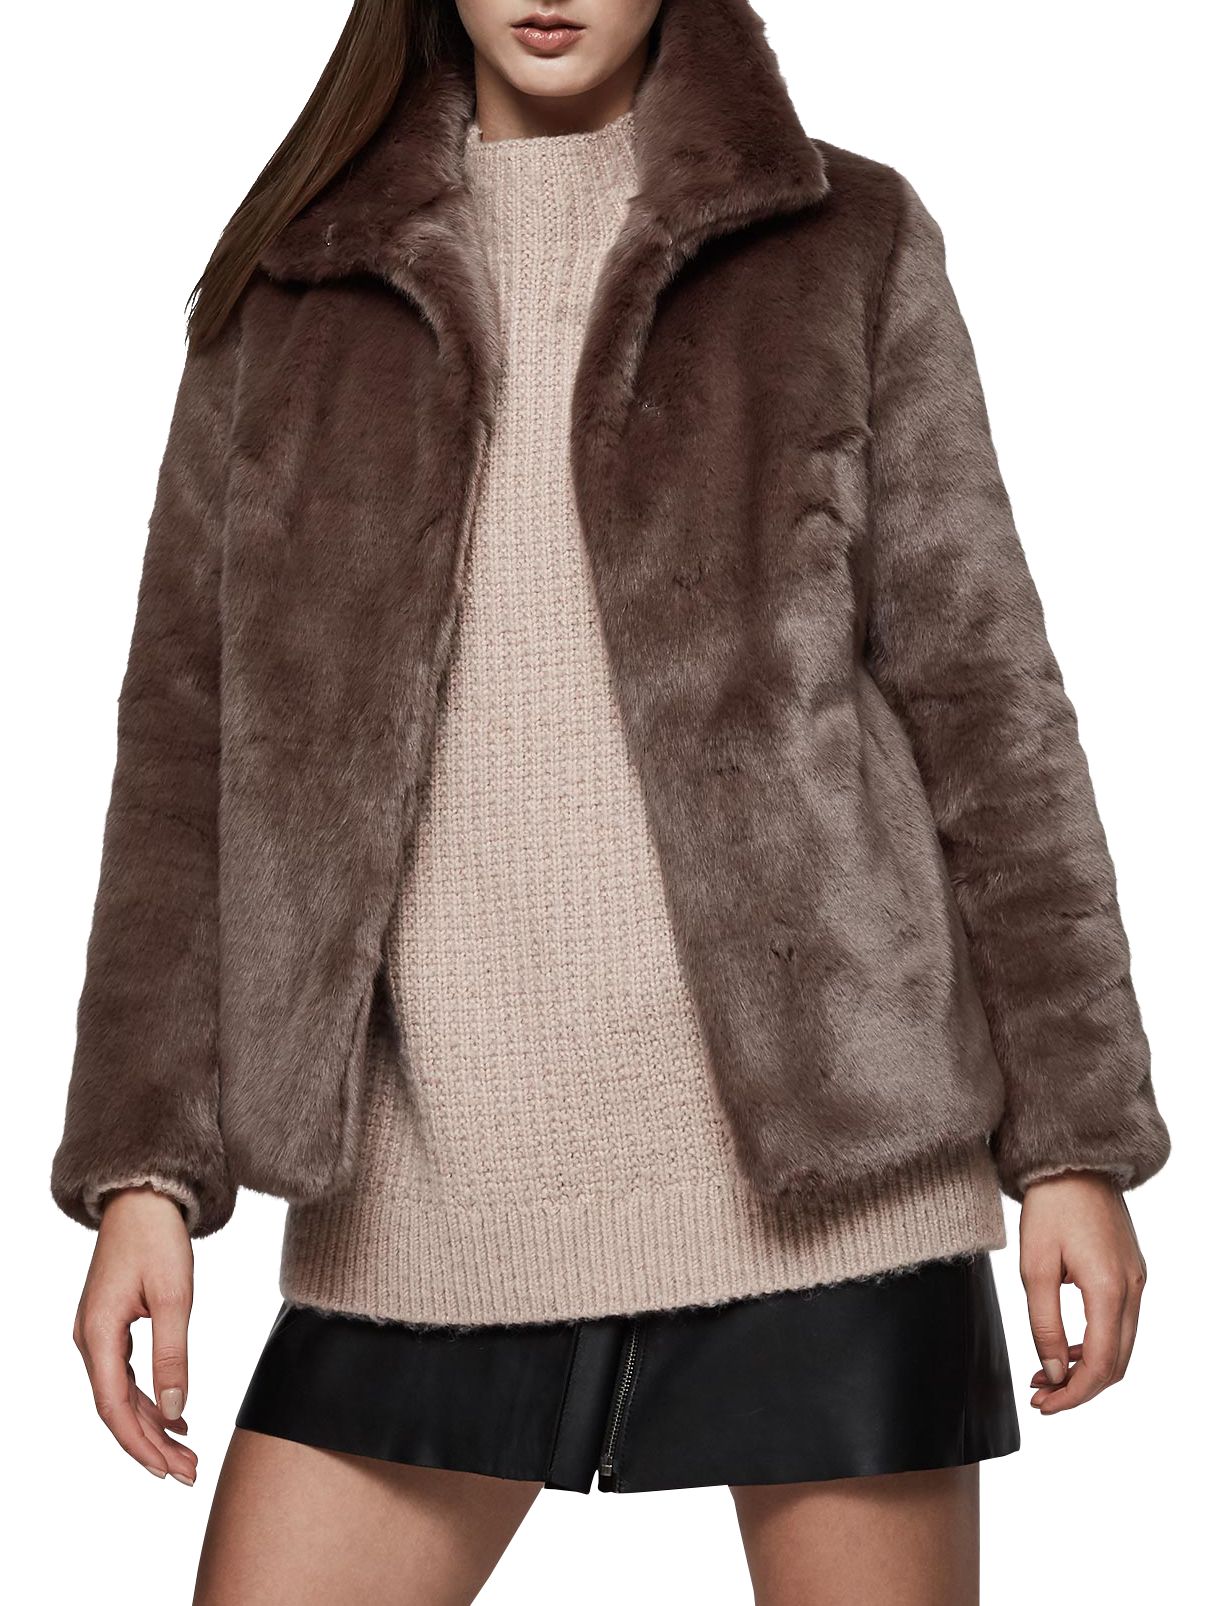 Reiss Orsa Faux Fur Coat at John Lewis & Partners